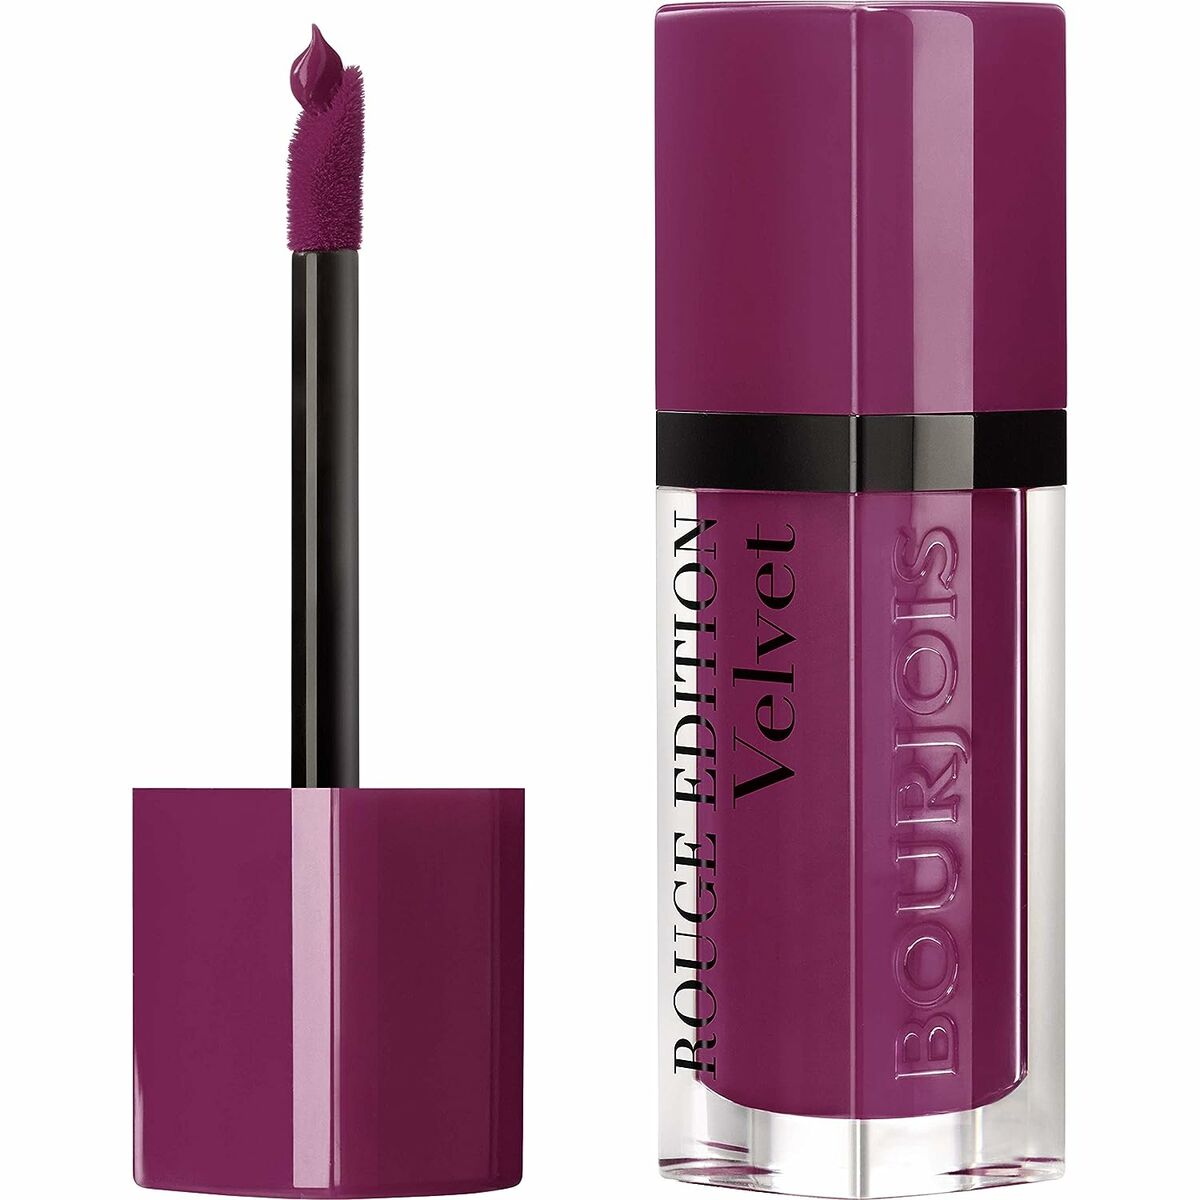 Liquid lipstick Bourjois 10003272 Violet